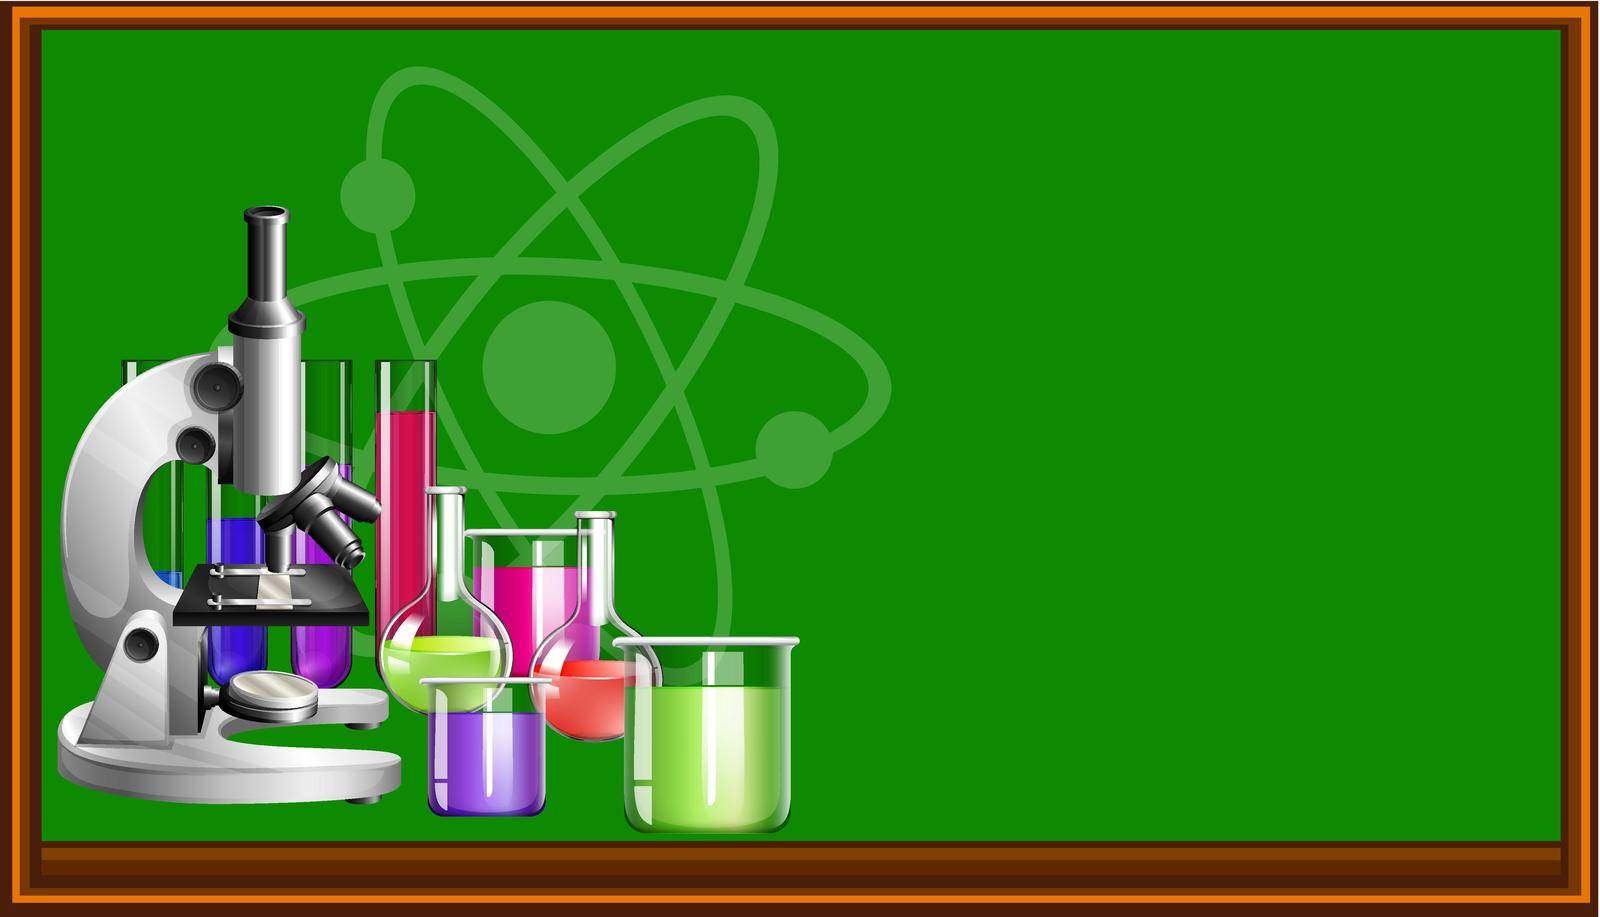 Science equipment and blackboard illustration